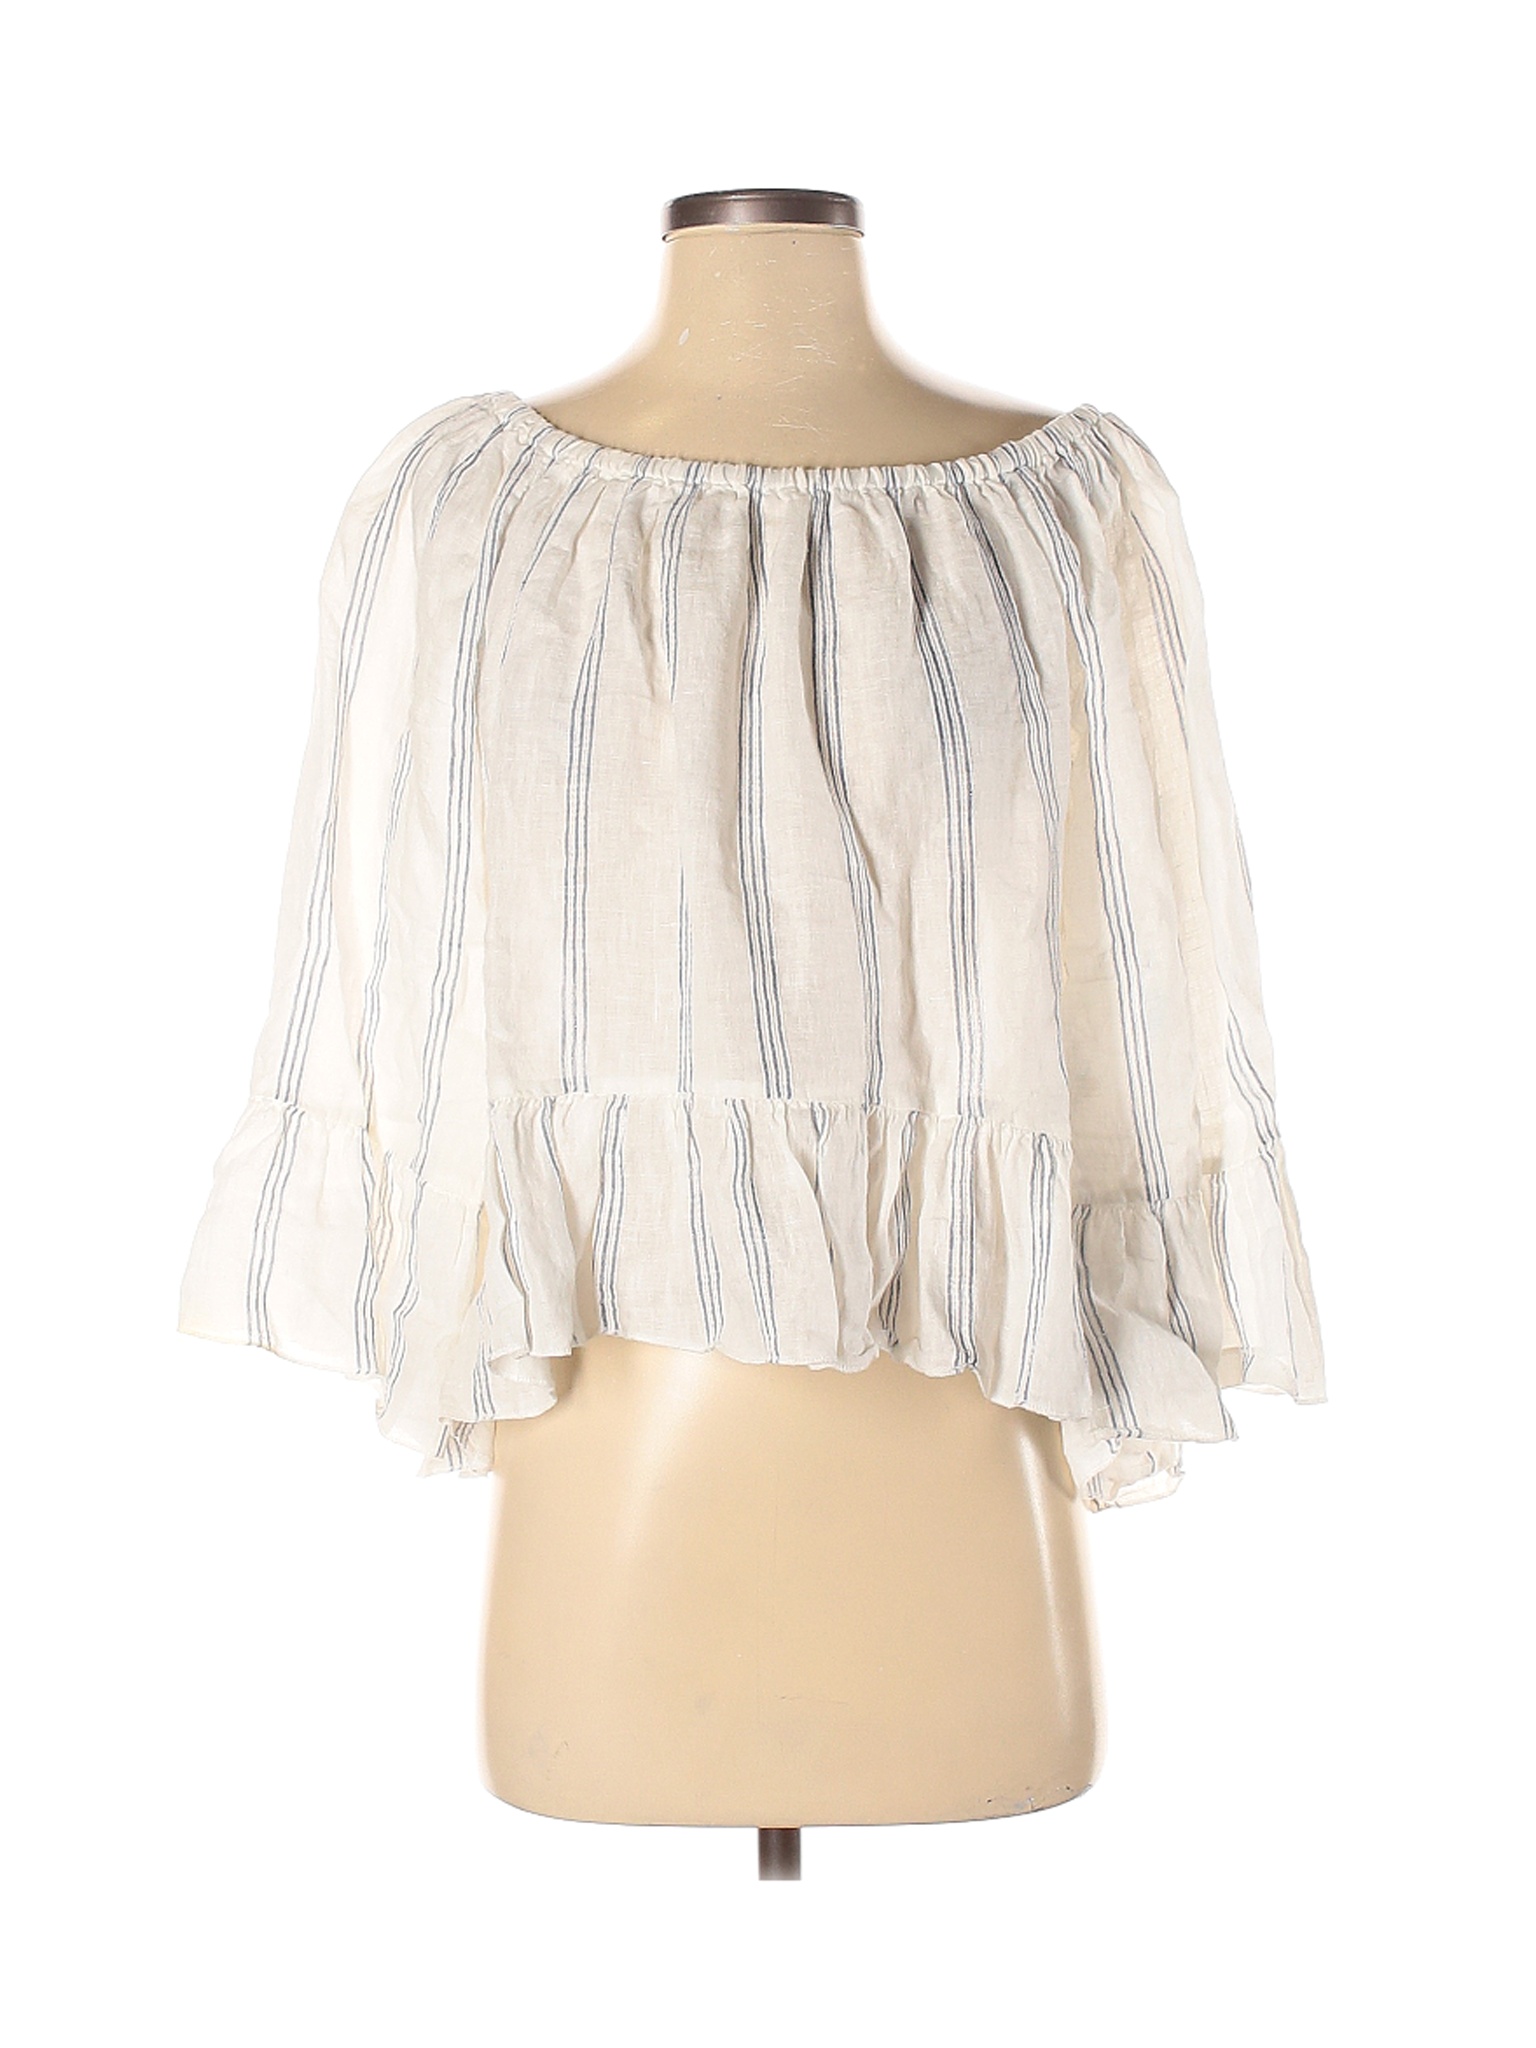 Thread & Supply Women Ivory Long Sleeve Top S | eBay